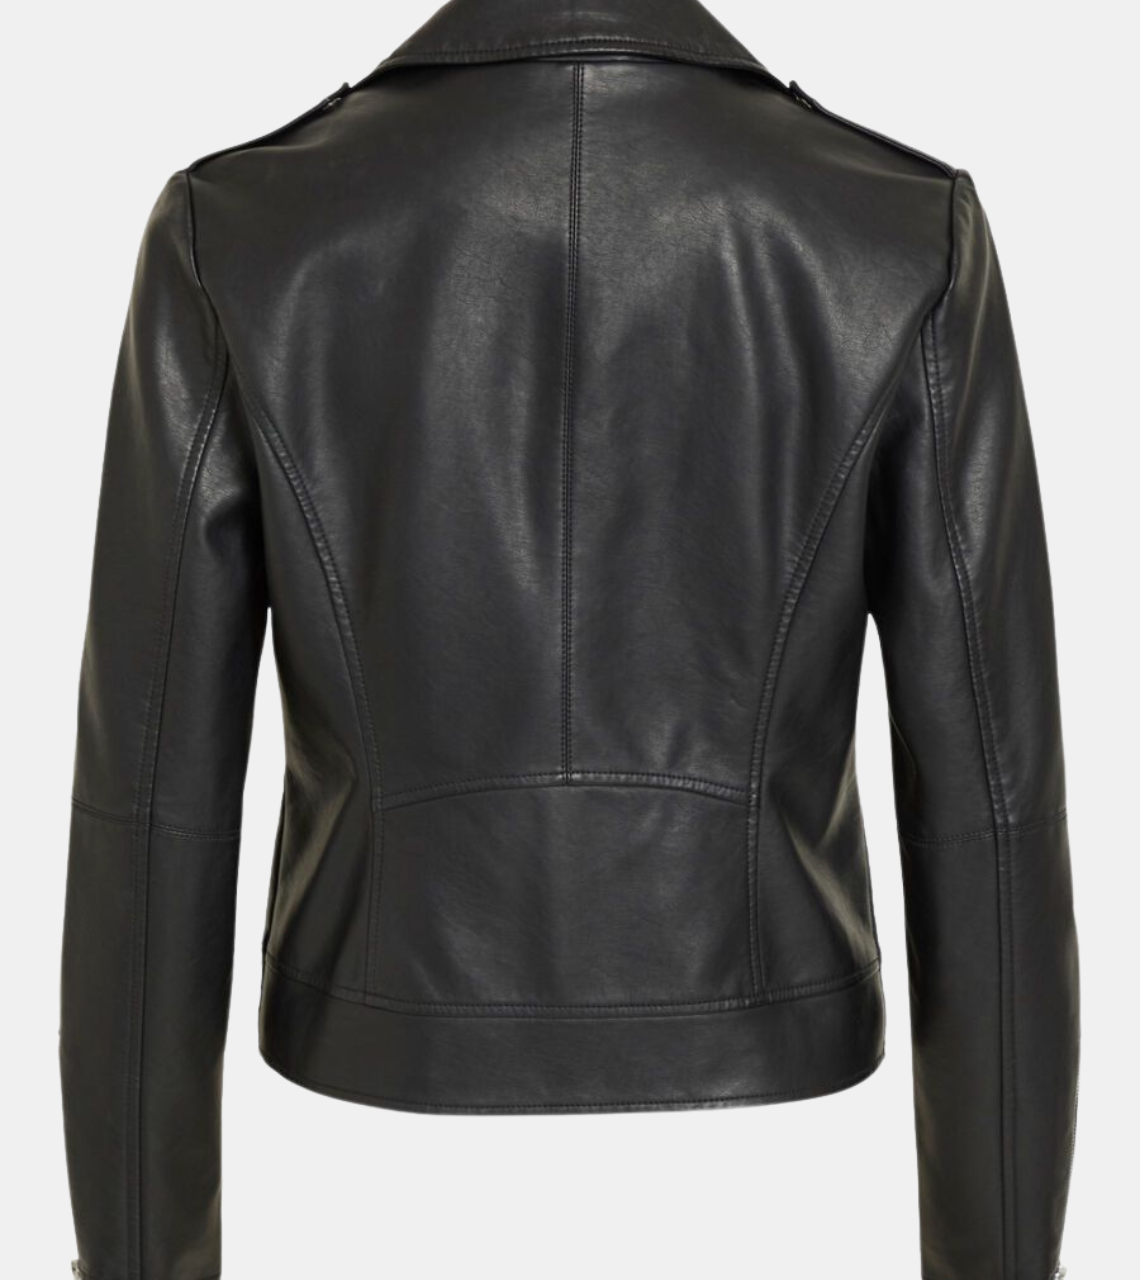  Calix Black Leather Biker Jacket For Women's 